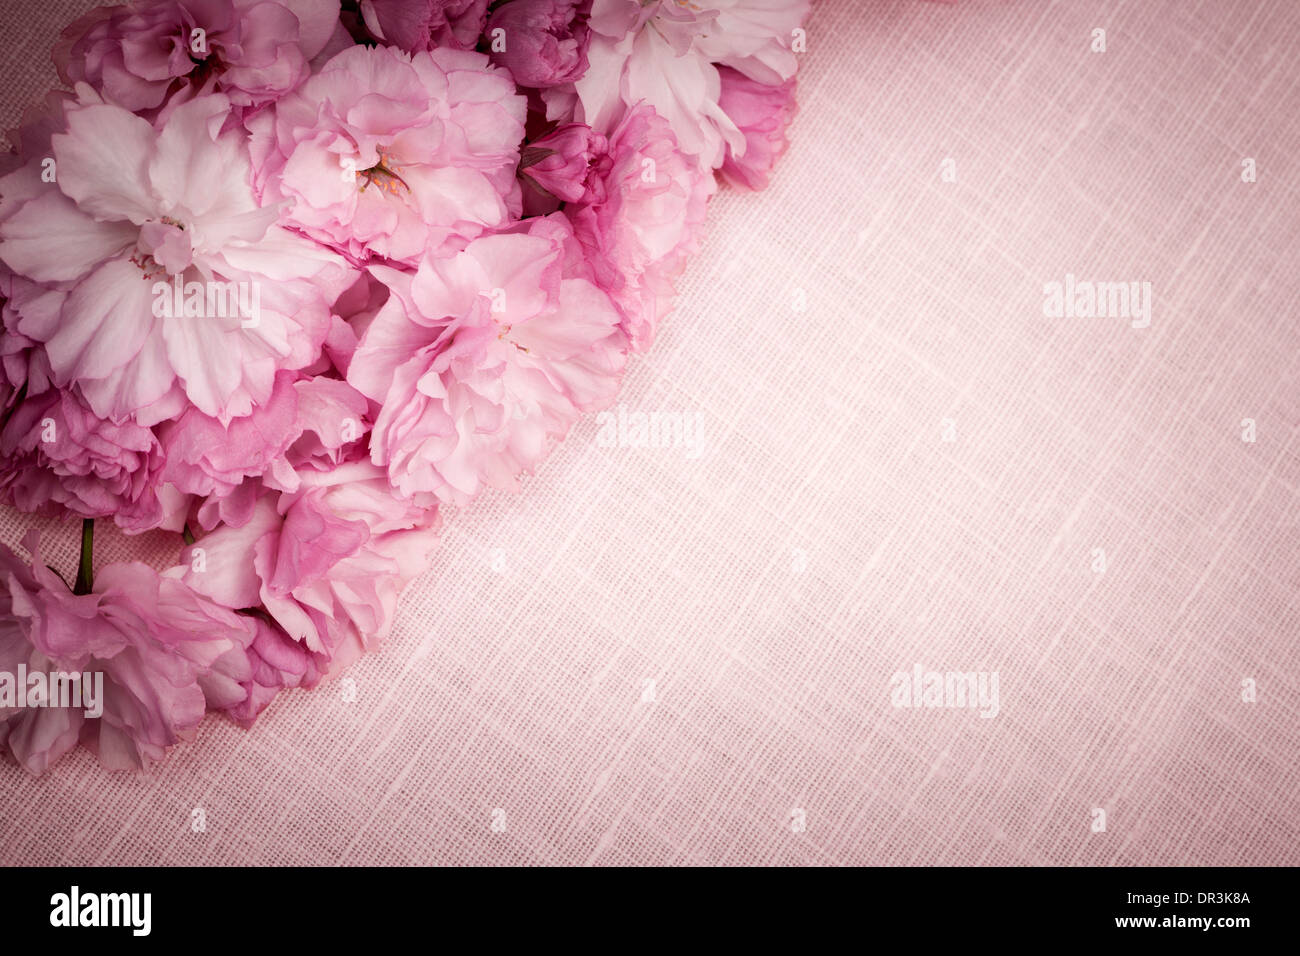 Rosa Leinen Hintergrund mit Kirschblüten Stockfoto